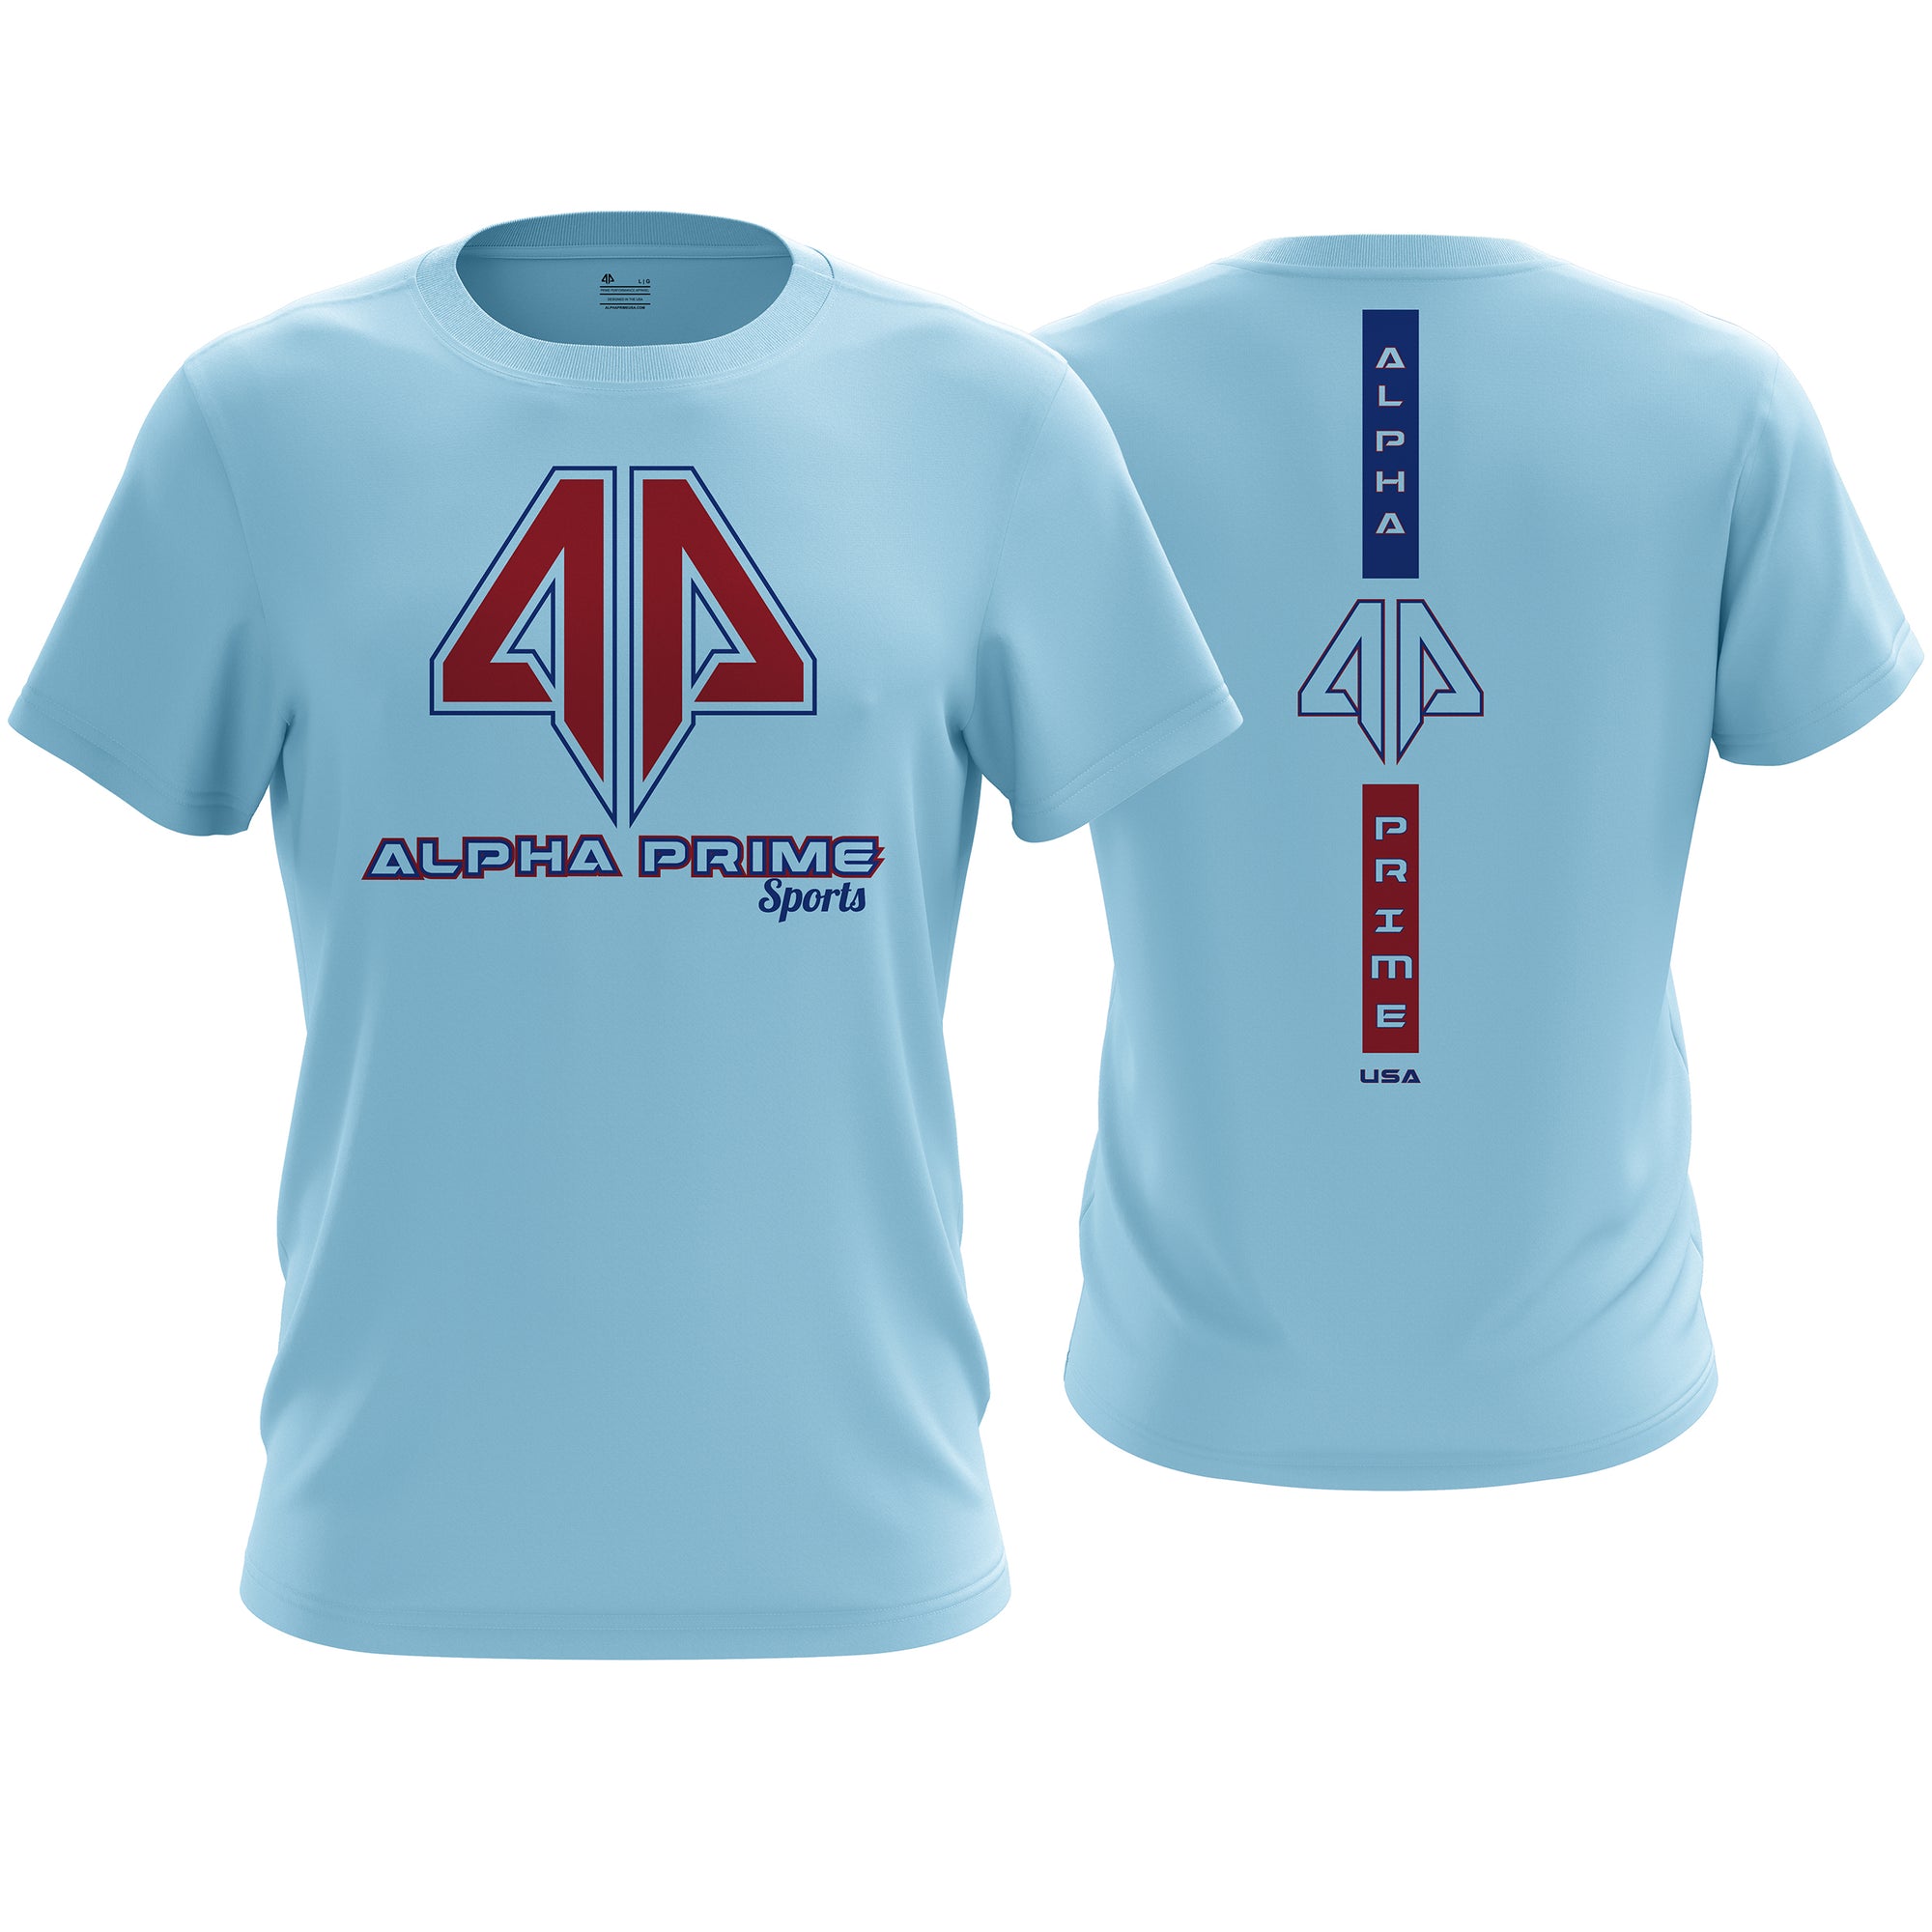 Alpha Prime Brand - Spot Shirt v8 - Alpha Prime